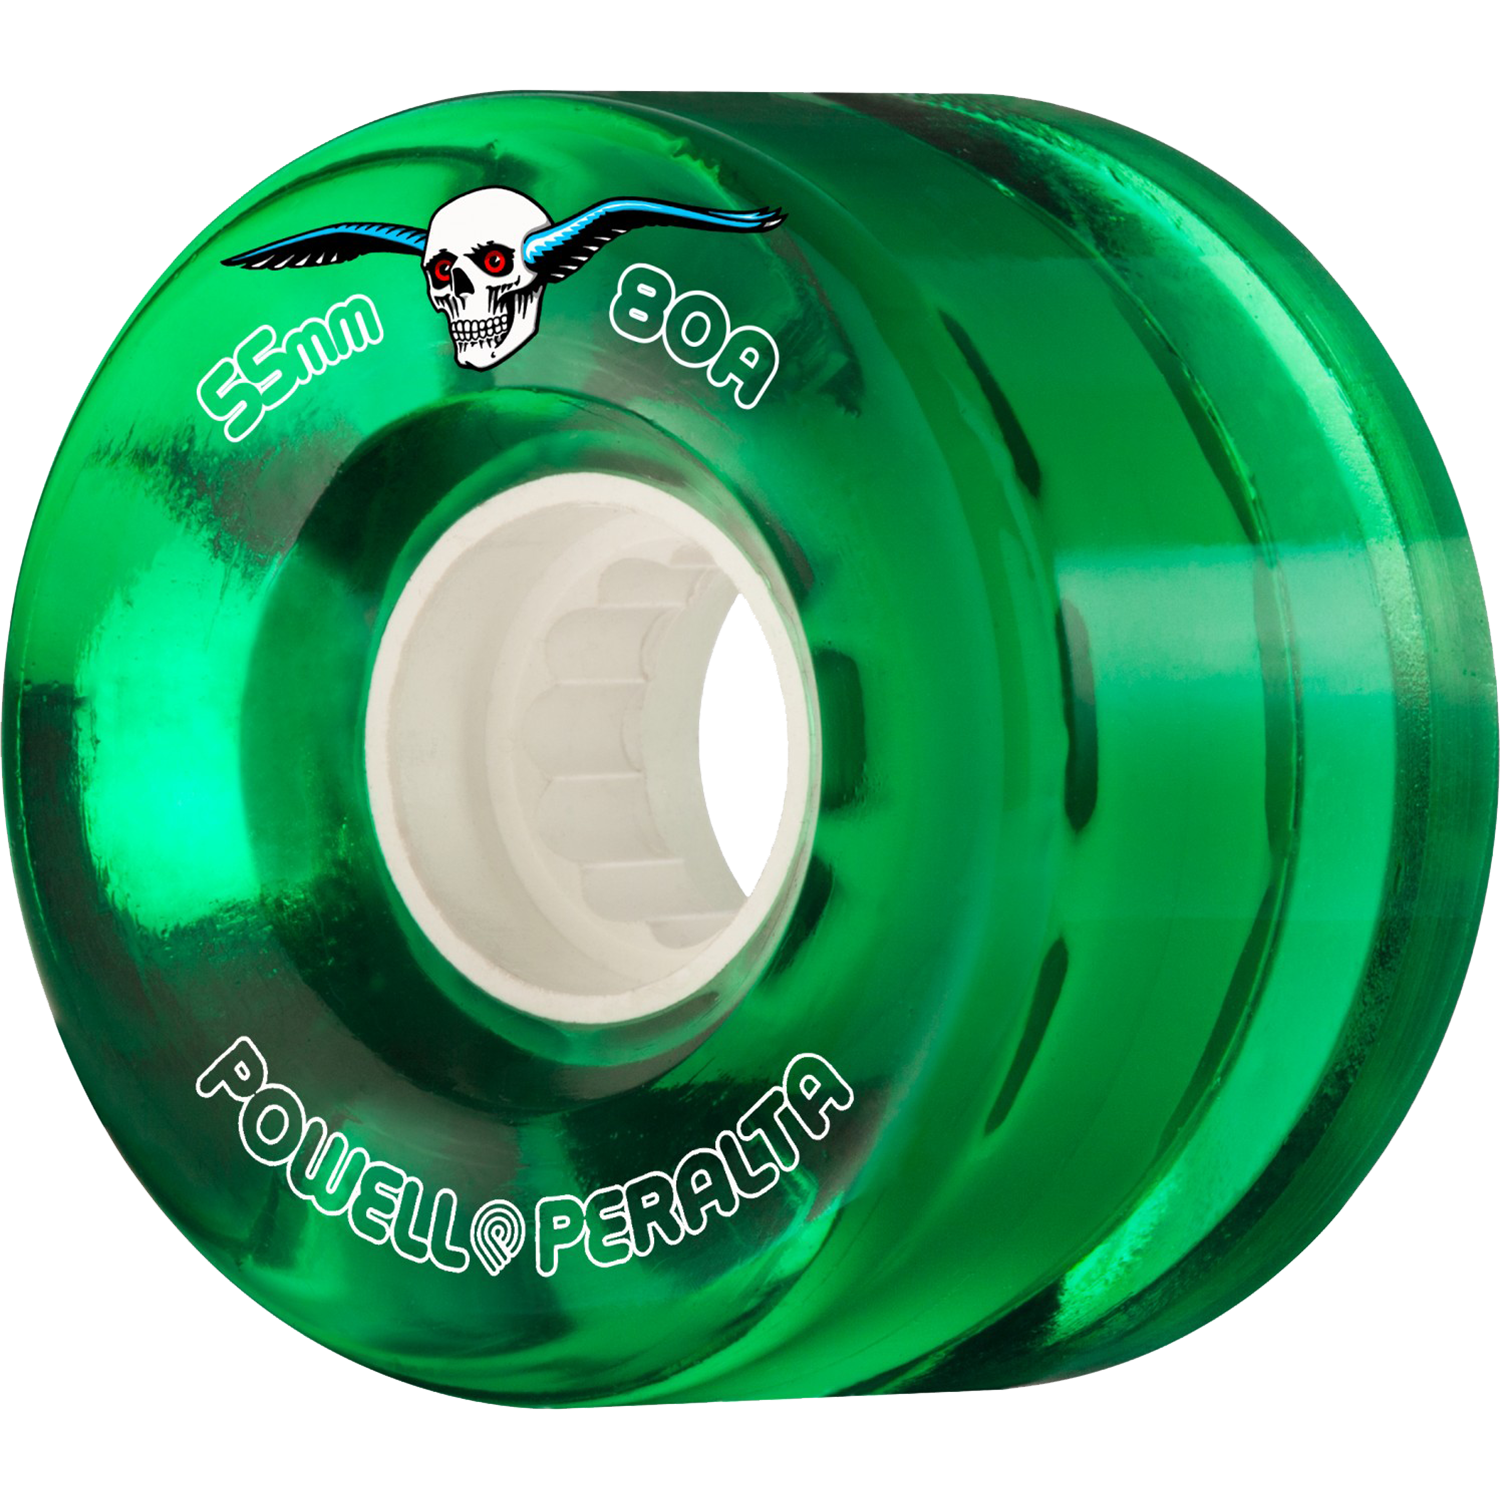 Powell Peralta Clear Cruiser 55mm 80a Green Skateboard Wheels (Set of 4)